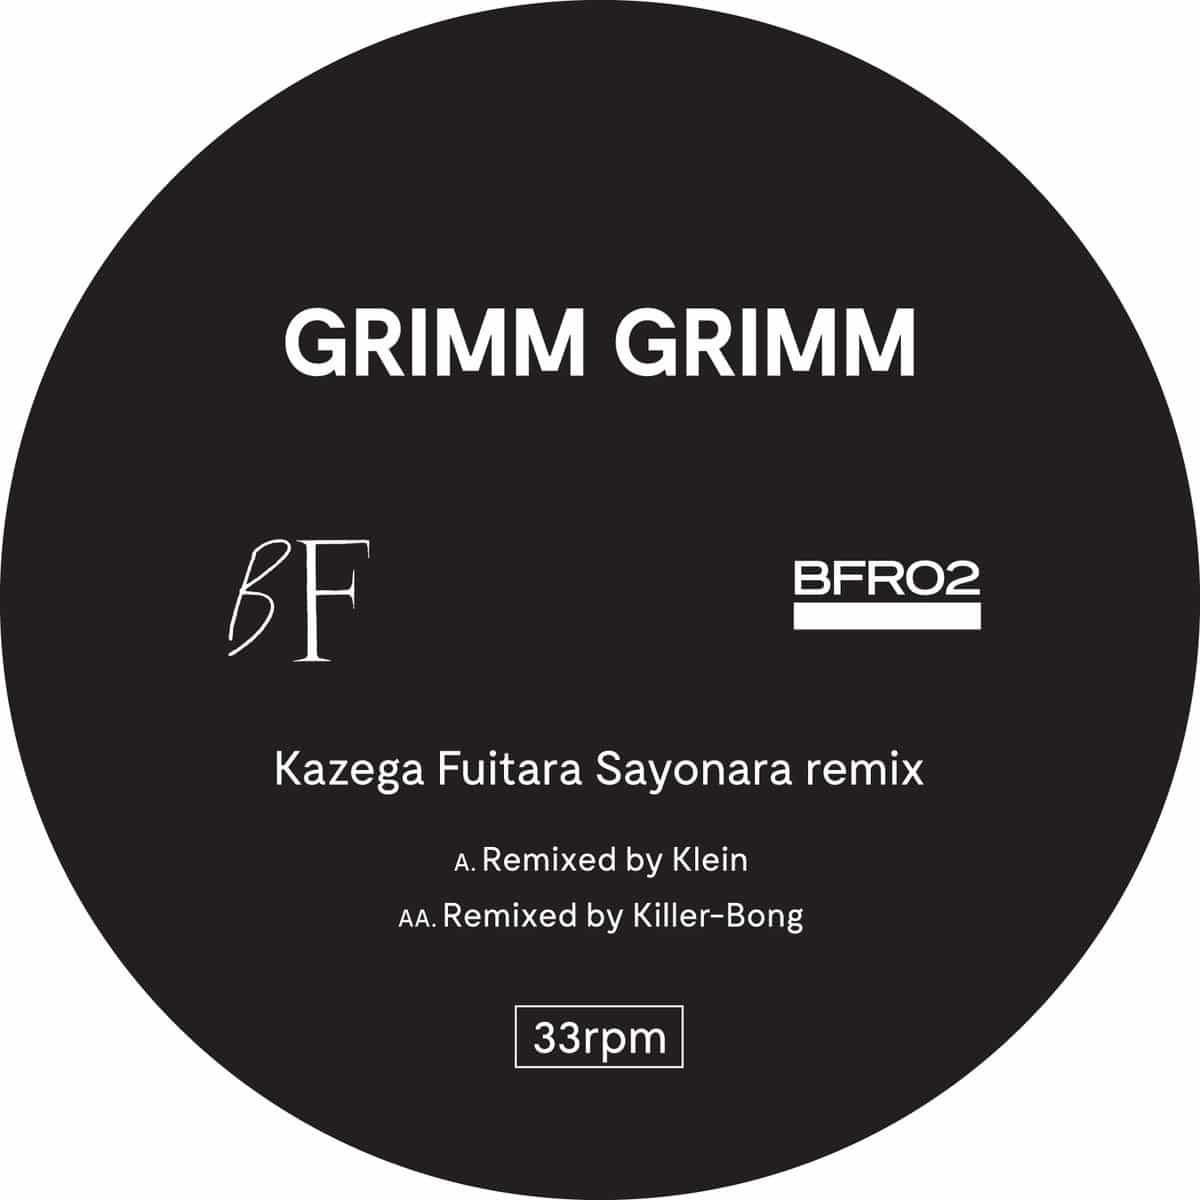 Grimm Grimm - Kazega Fuitara Sayonara Remixes (Klein